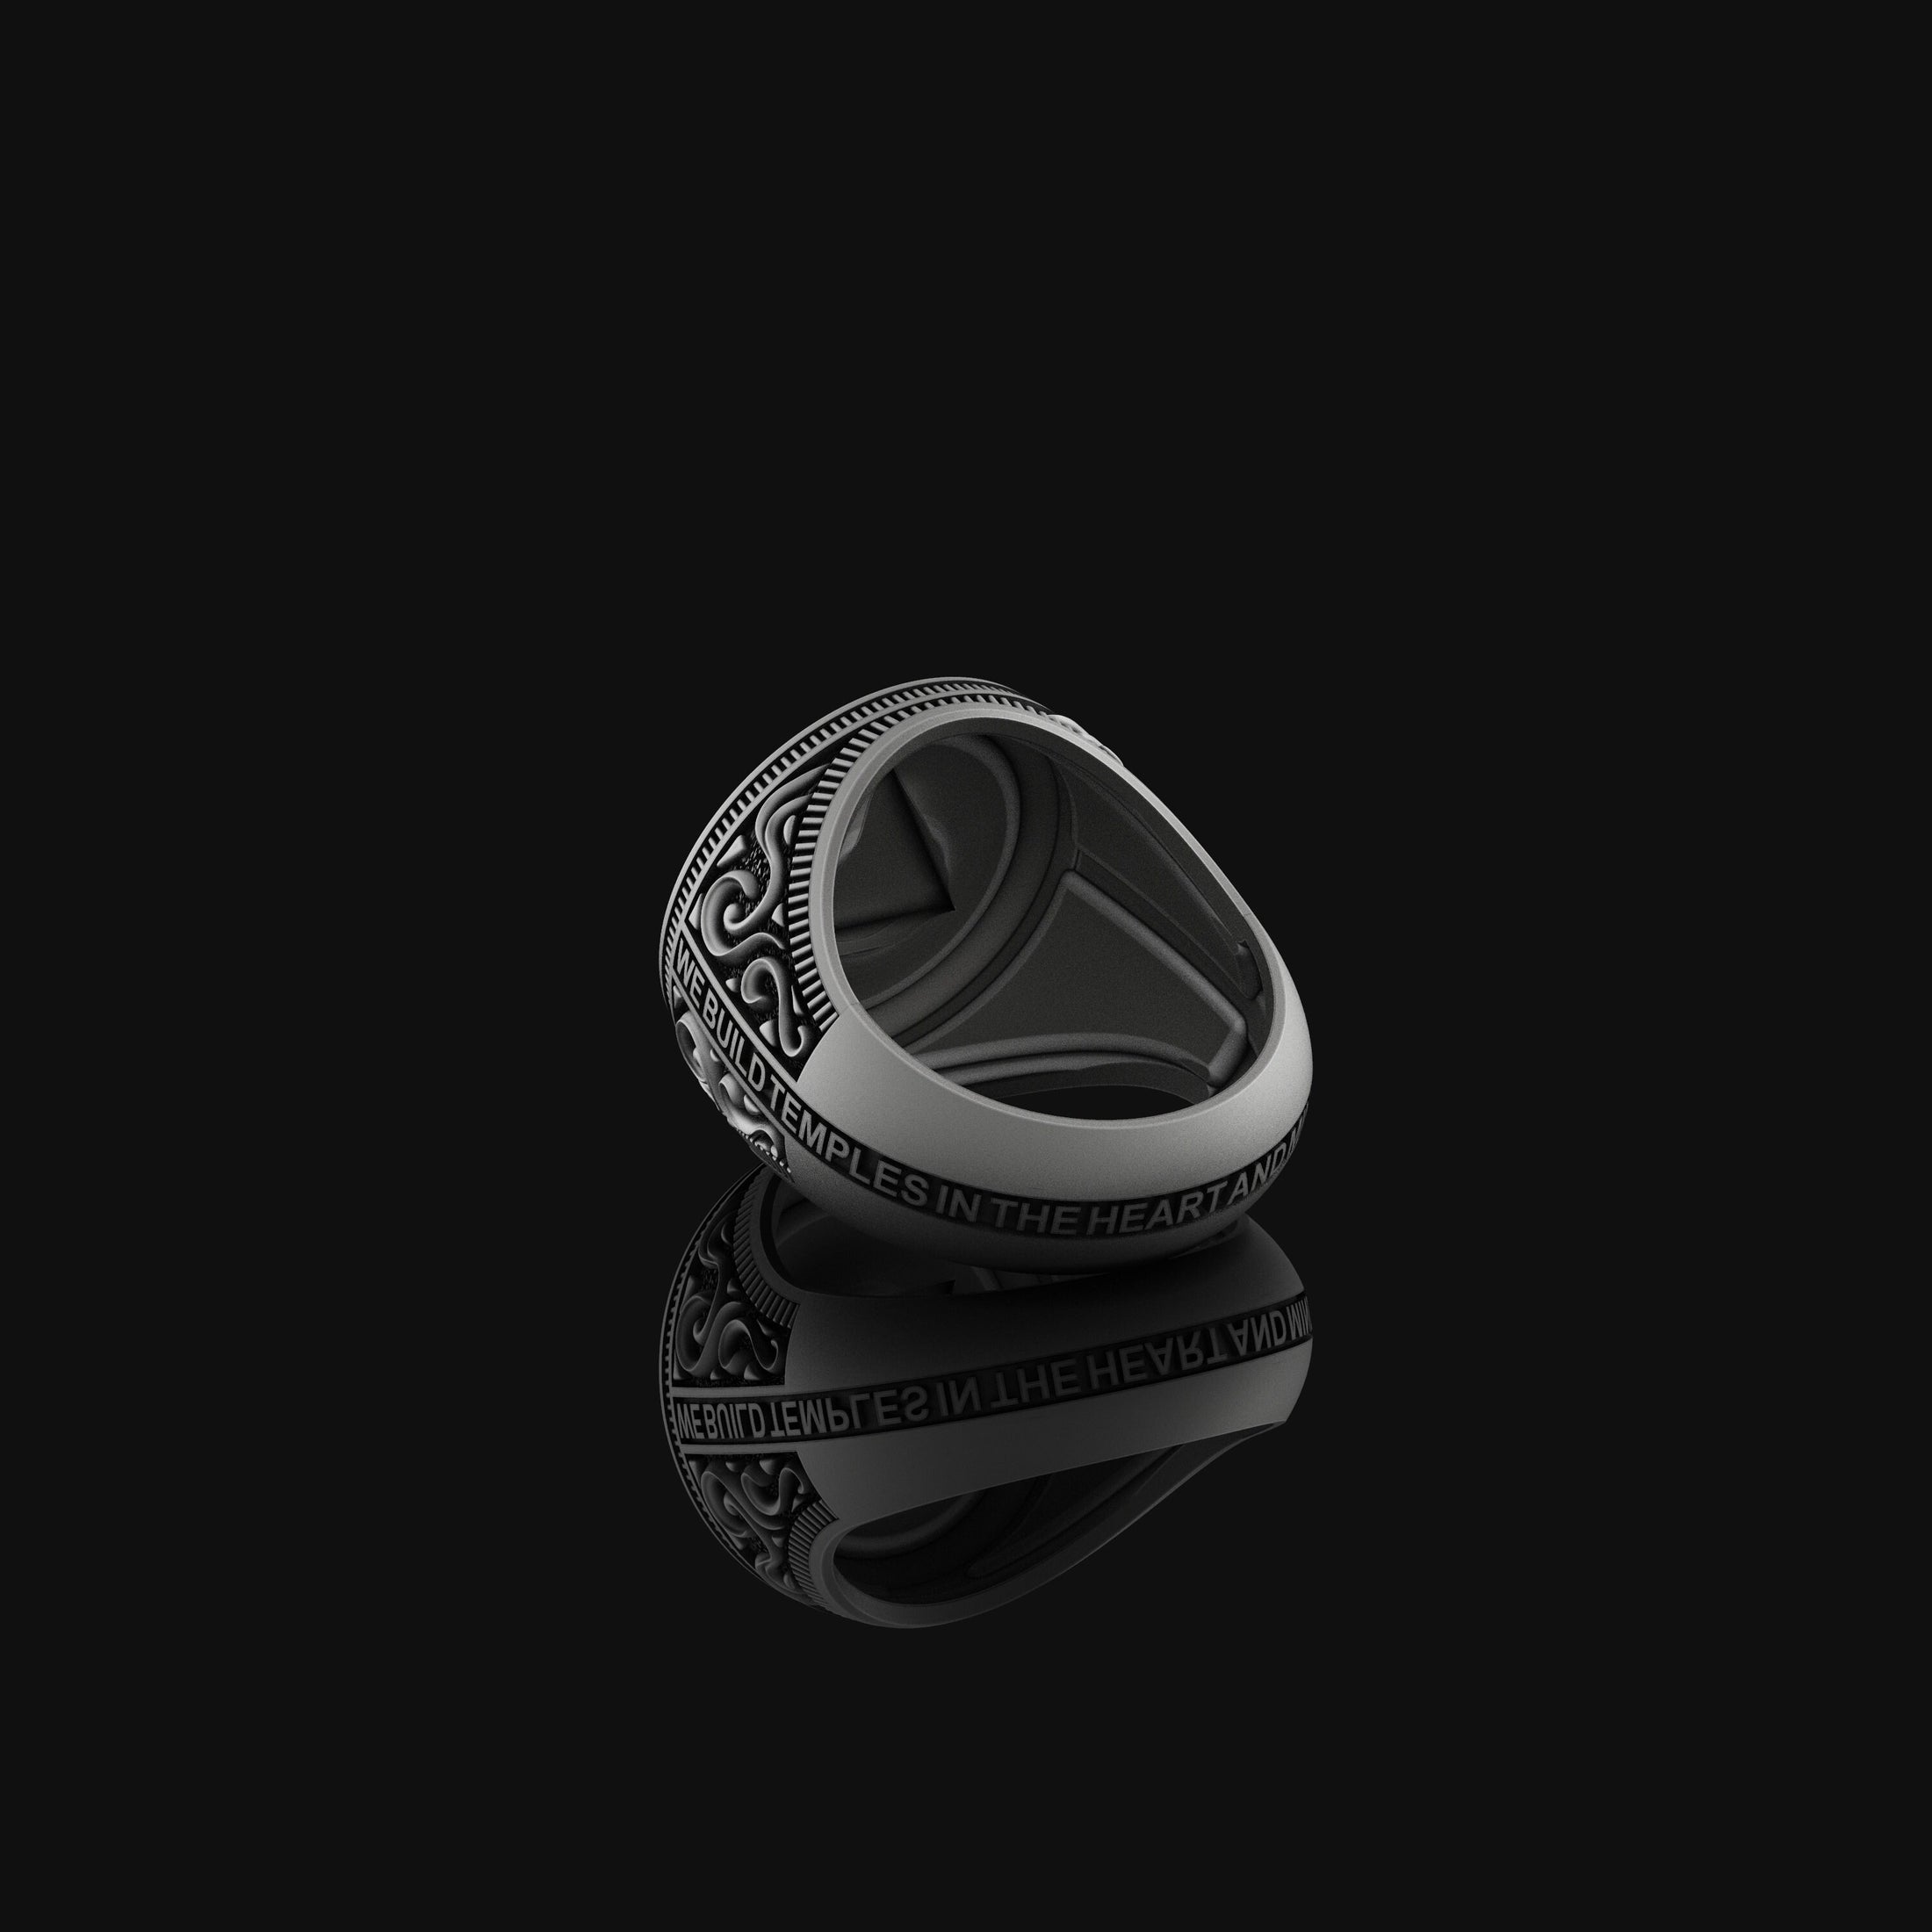 Masonic Symbol Ring, Freemasonry Ring, Unique Mason Ring, Handcrafted Masonic, Masonic Jewelry, Silver Mason Ring, Intricate Design